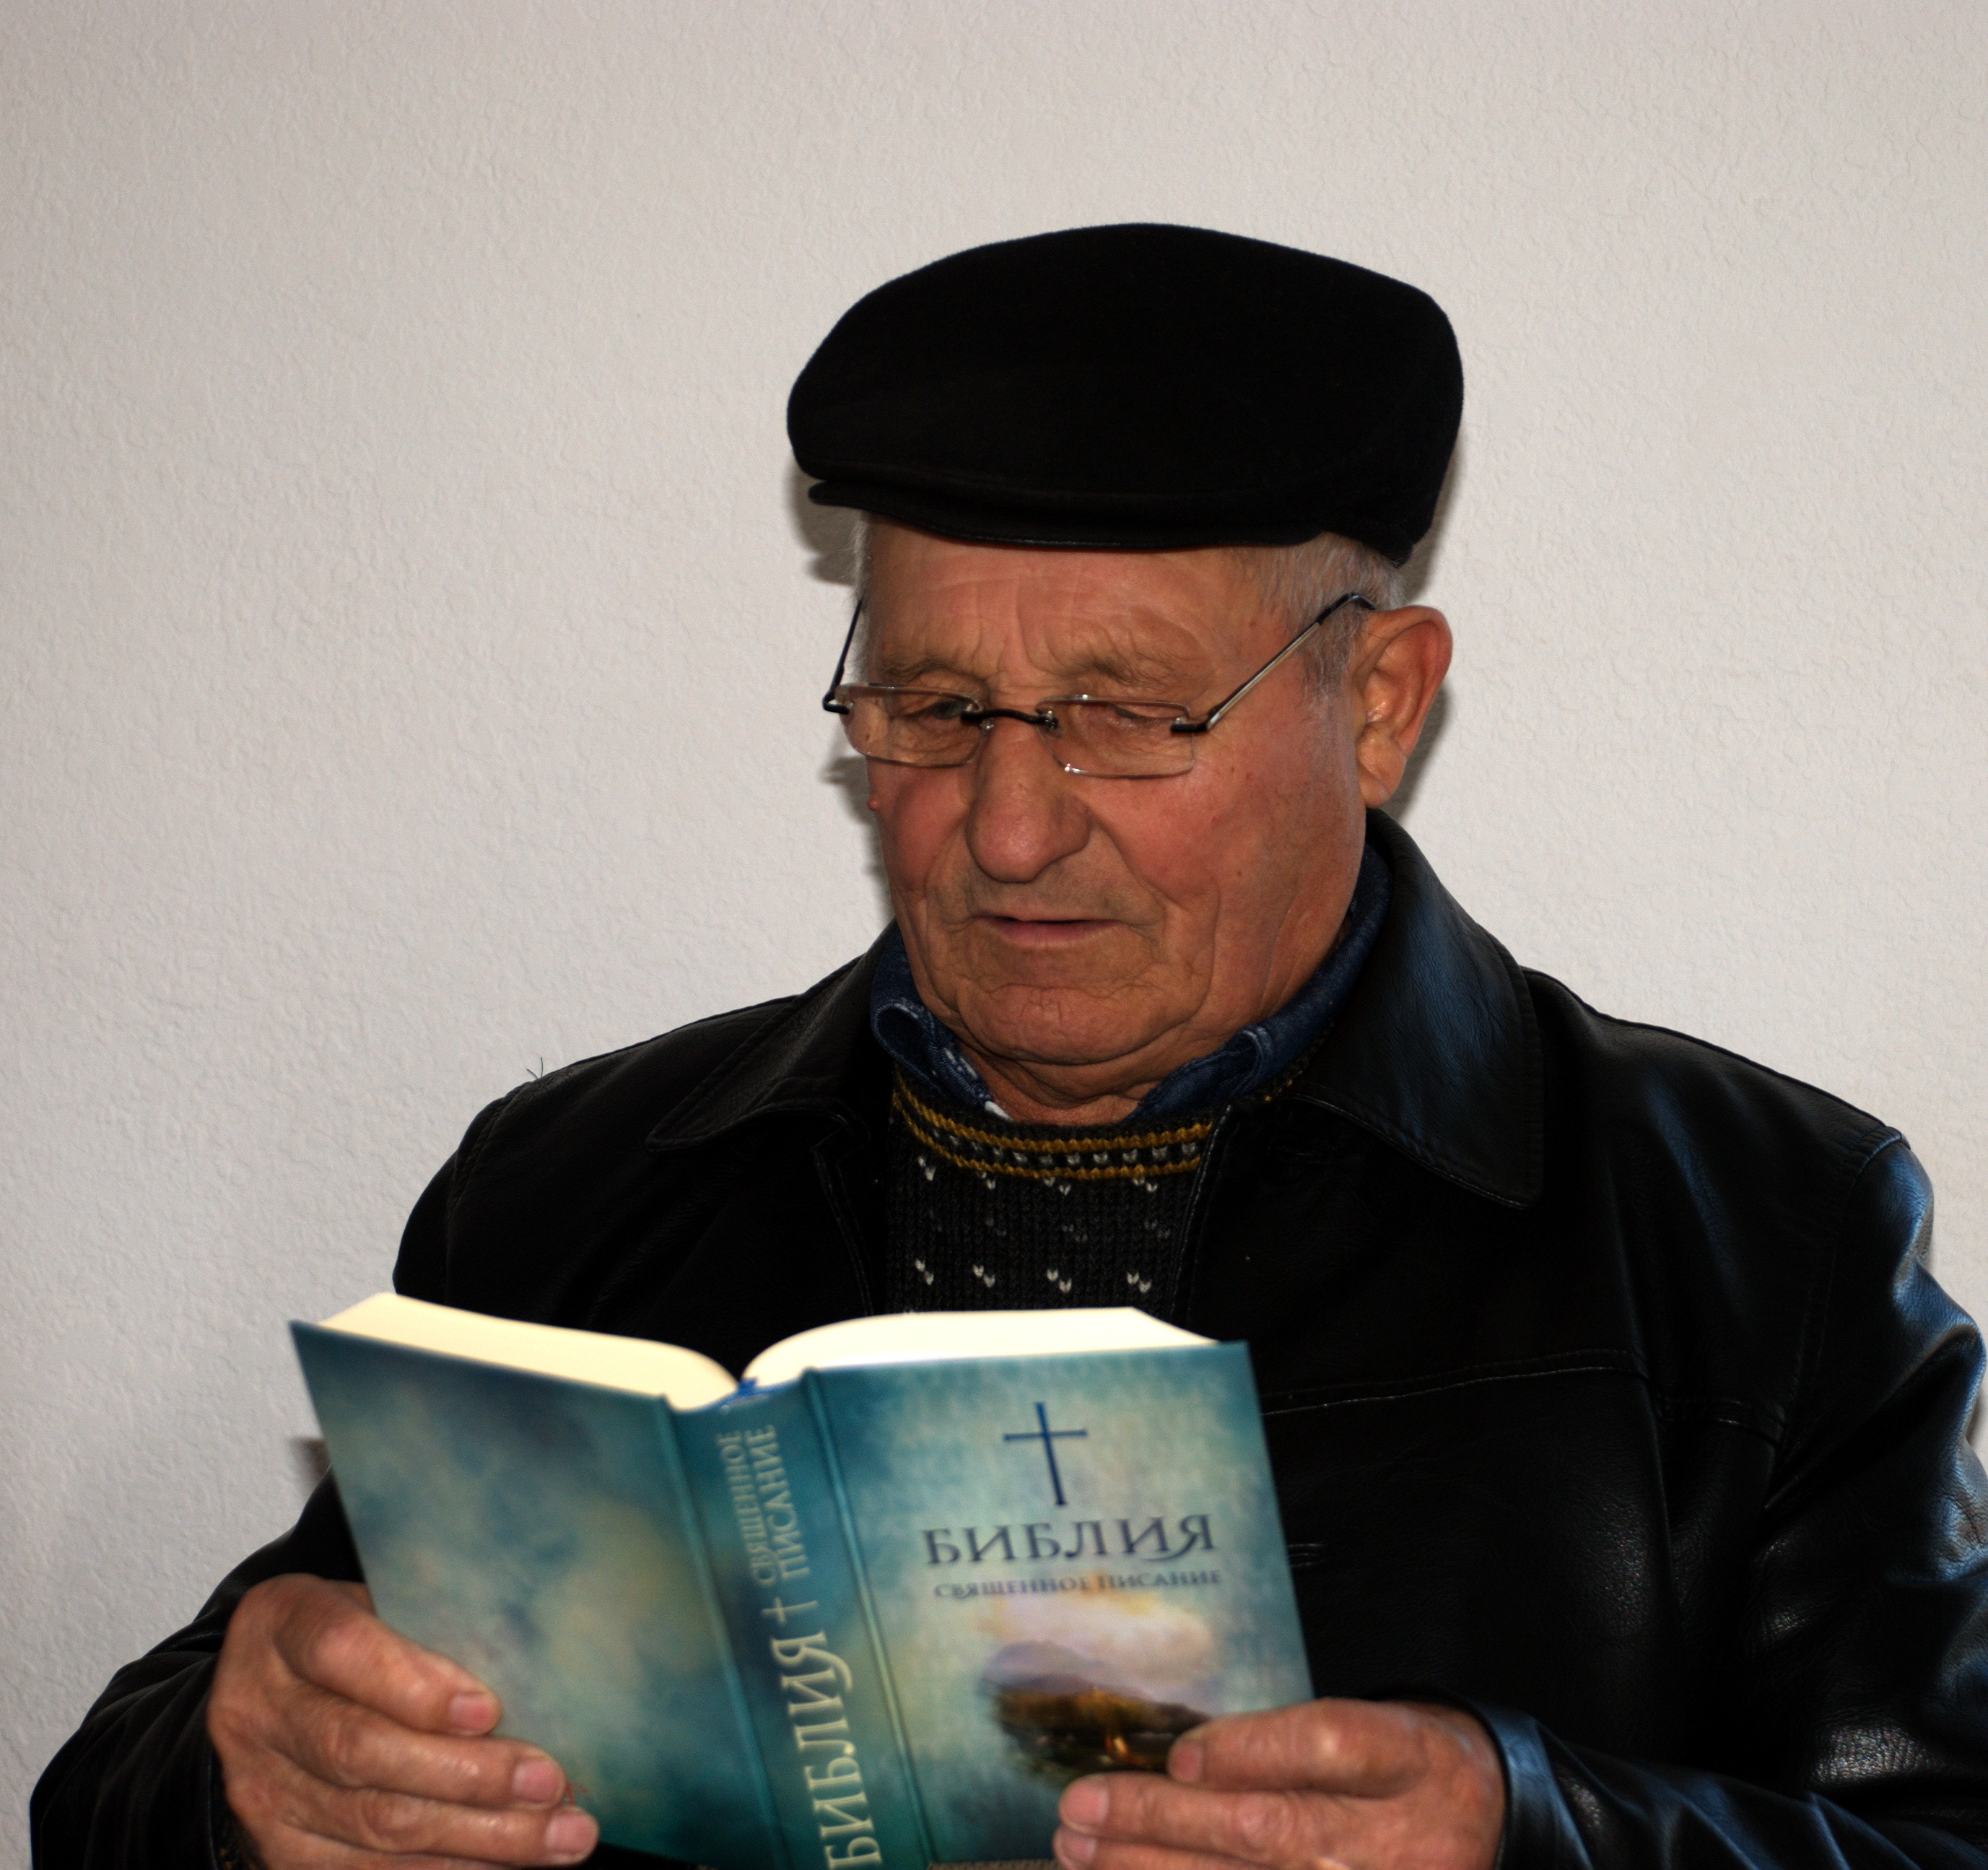 Ukrainian man with eyeglasses reading Scripture